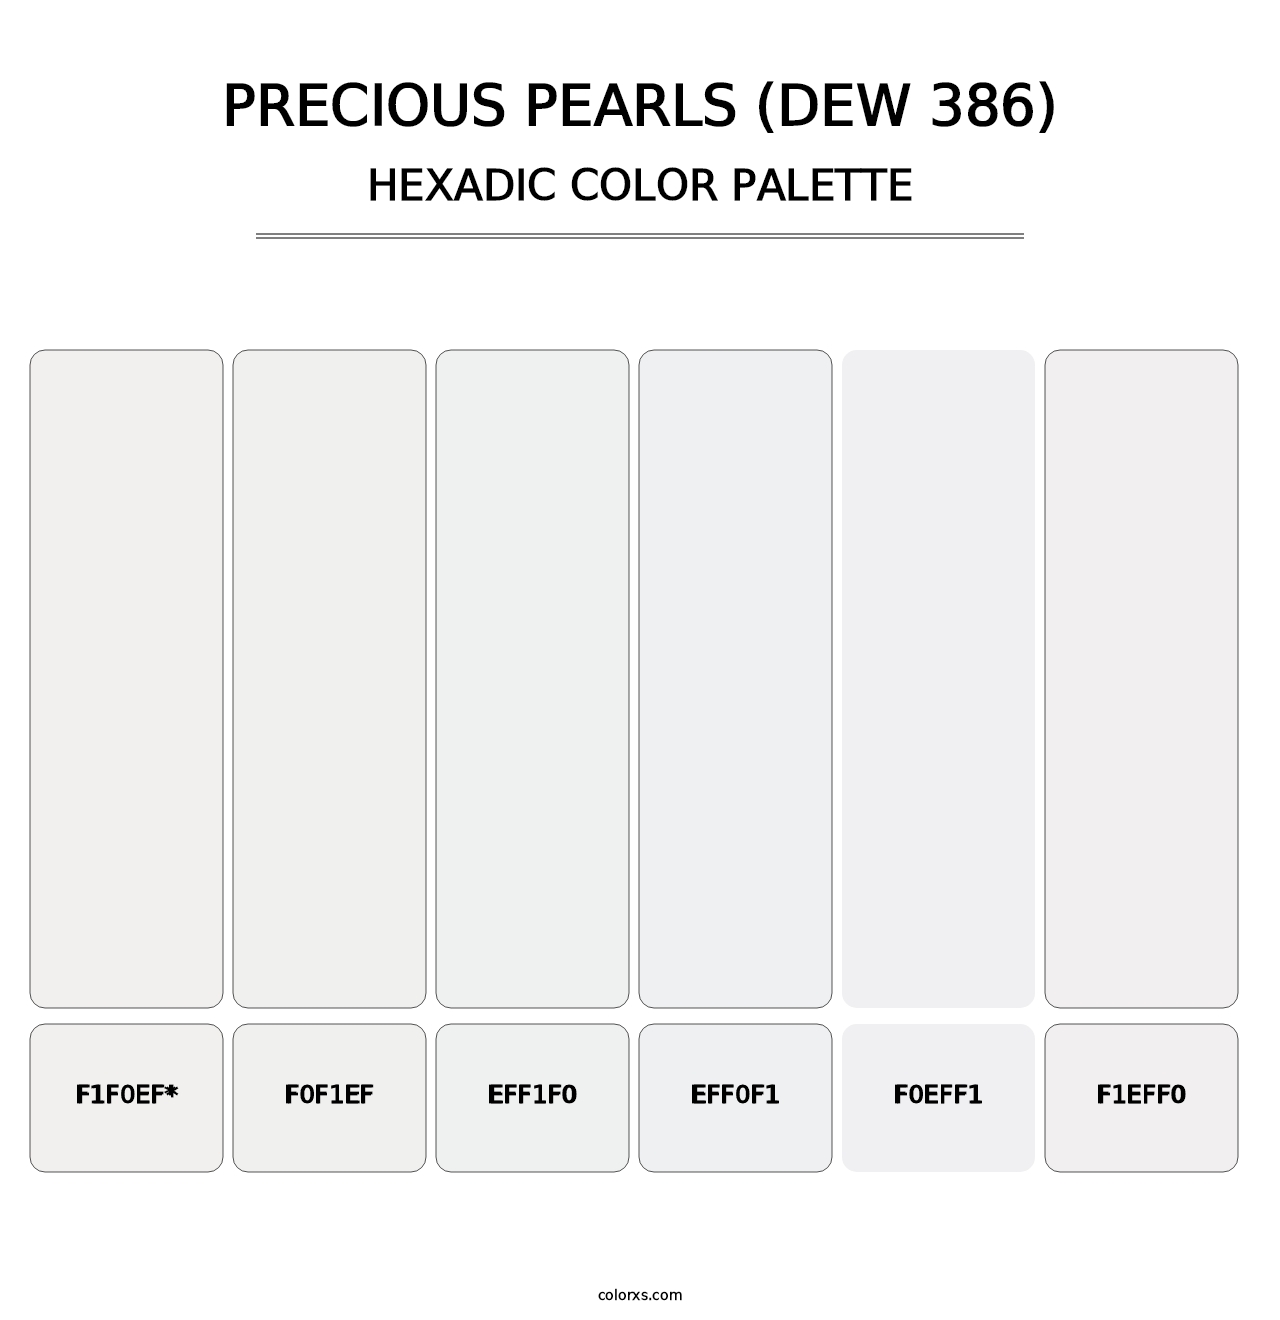 Precious Pearls (DEW 386) - Hexadic Color Palette